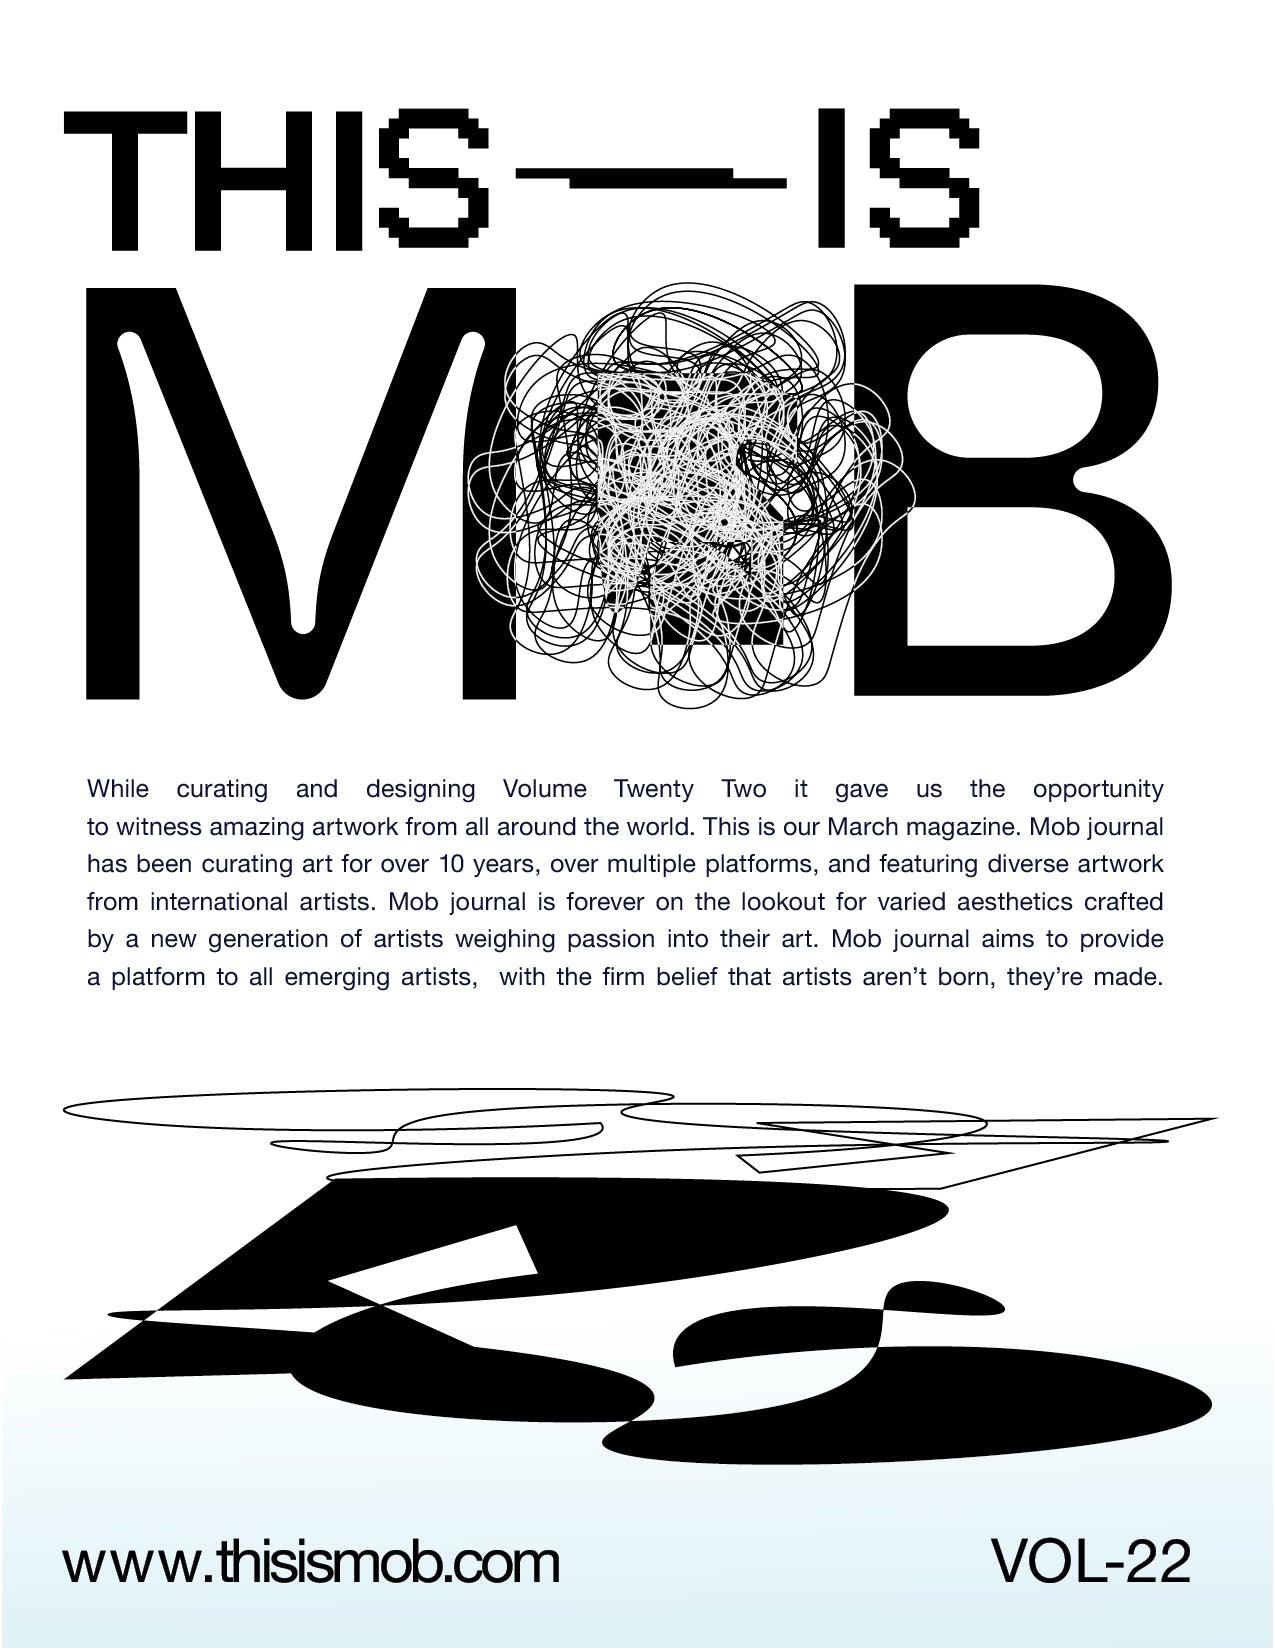 MOB JOURNAL | VOLUME TWENTY TWO | ISSUE #56 - Mob Journal